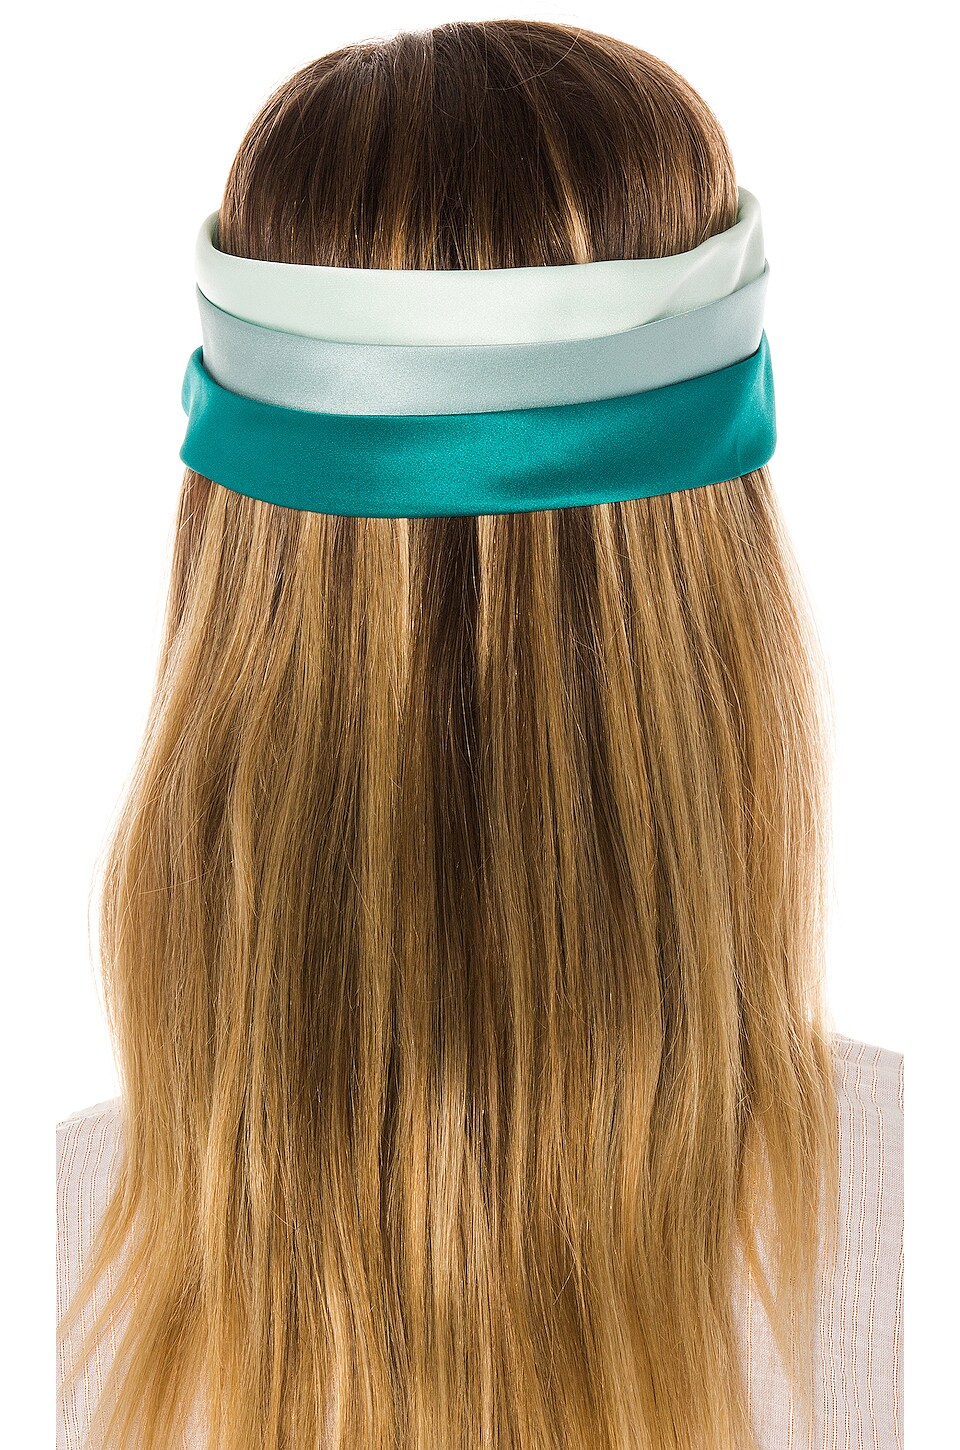 Eugenia Kim Hedy Headband in Mint, Seafoam & Teal